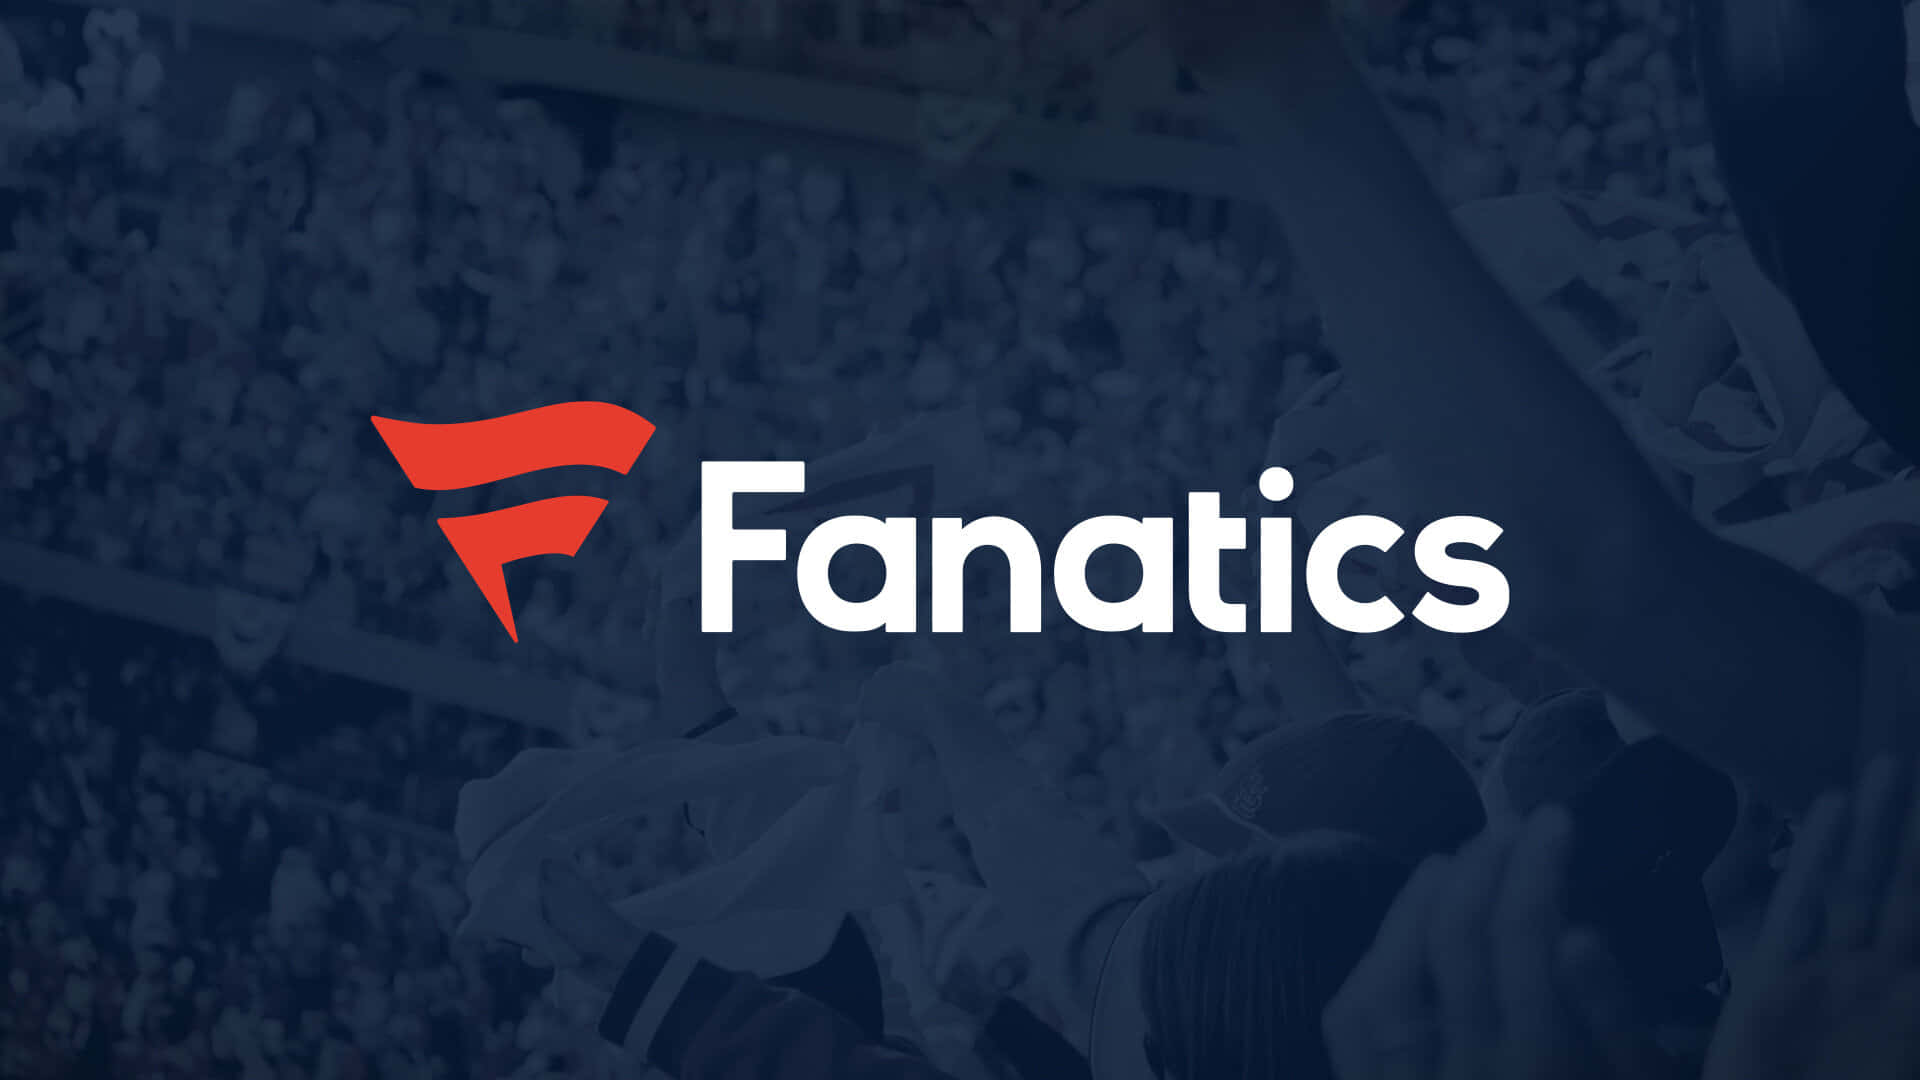 Fanatics Brand Logo Crowd Background Wallpaper